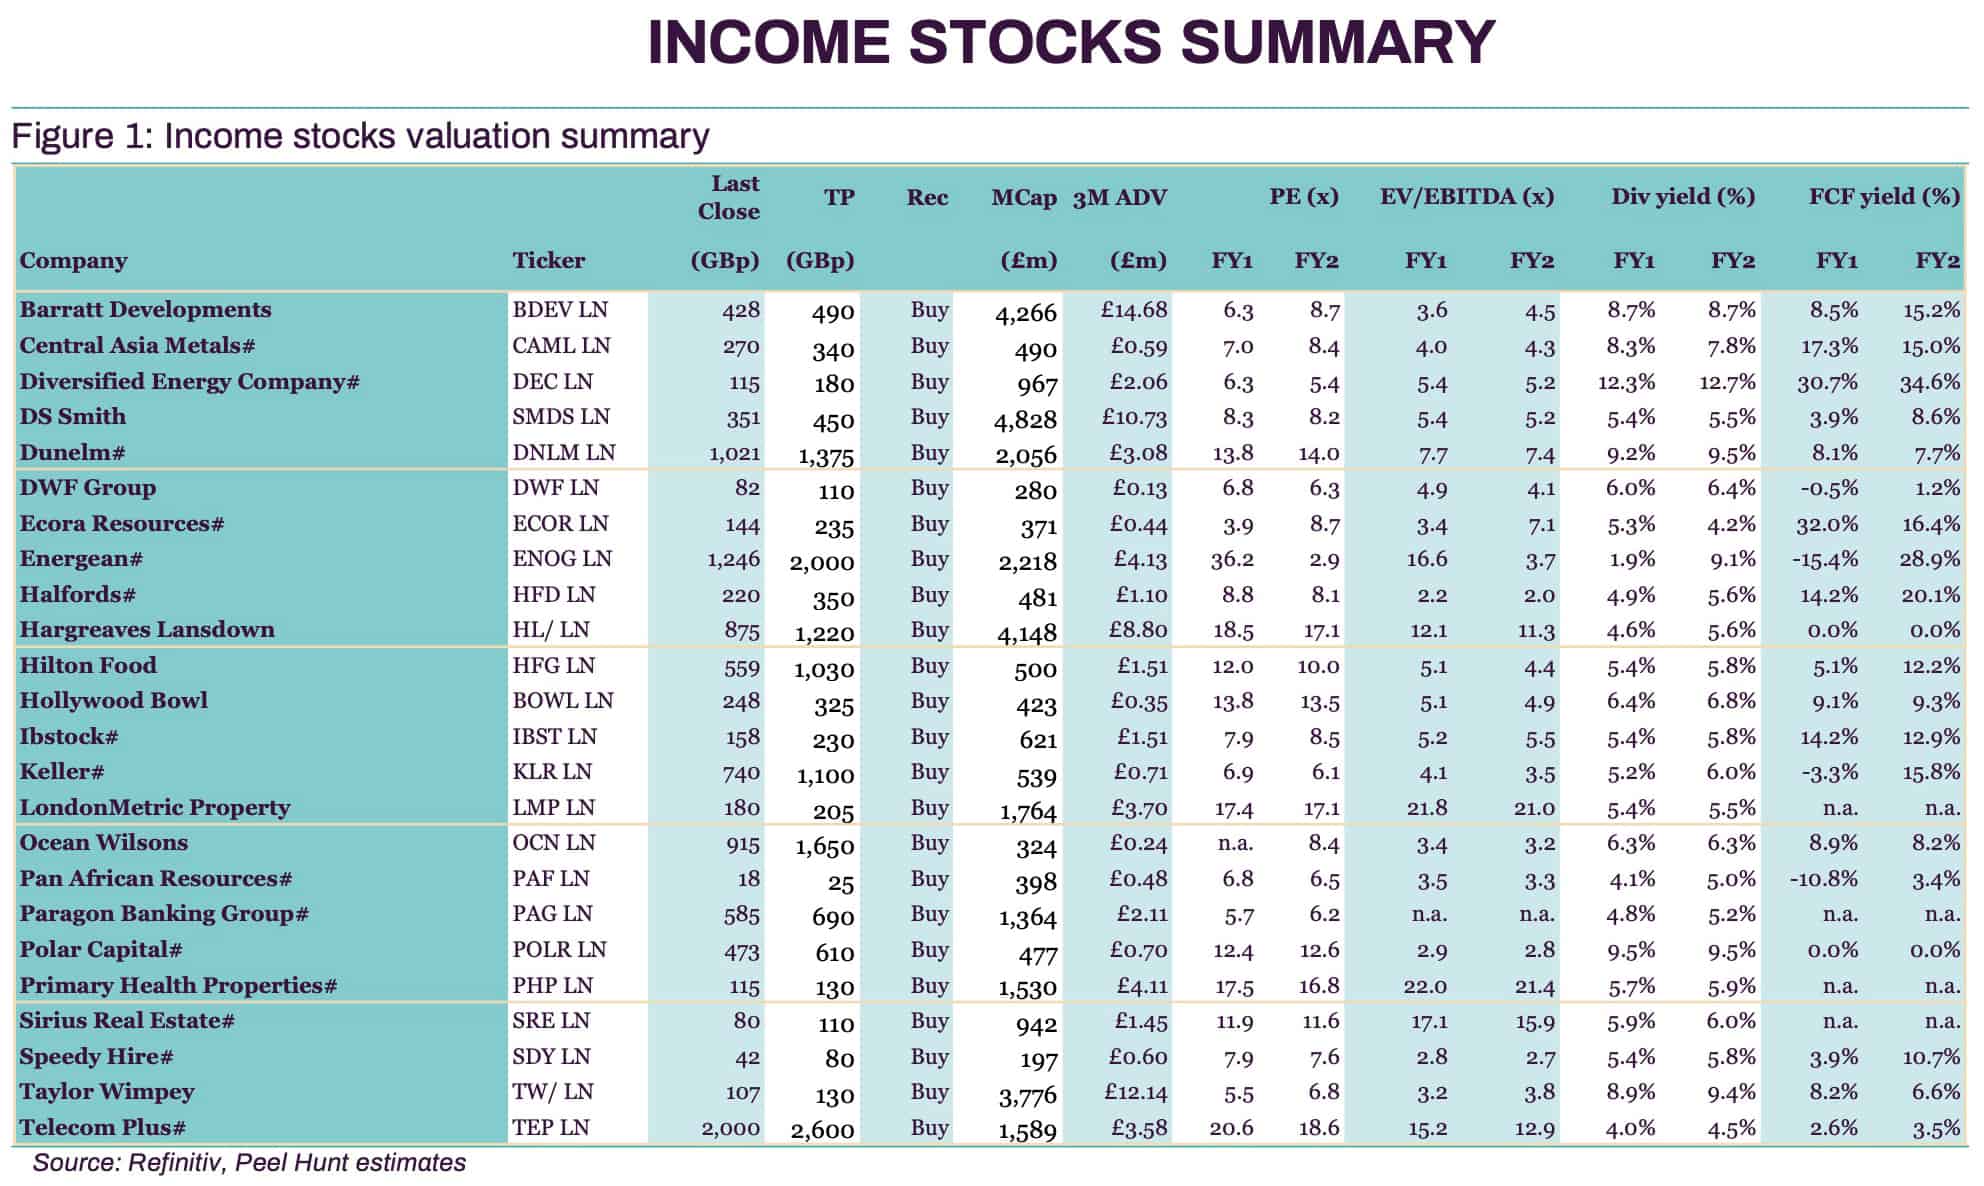 Income stocks valuation summary